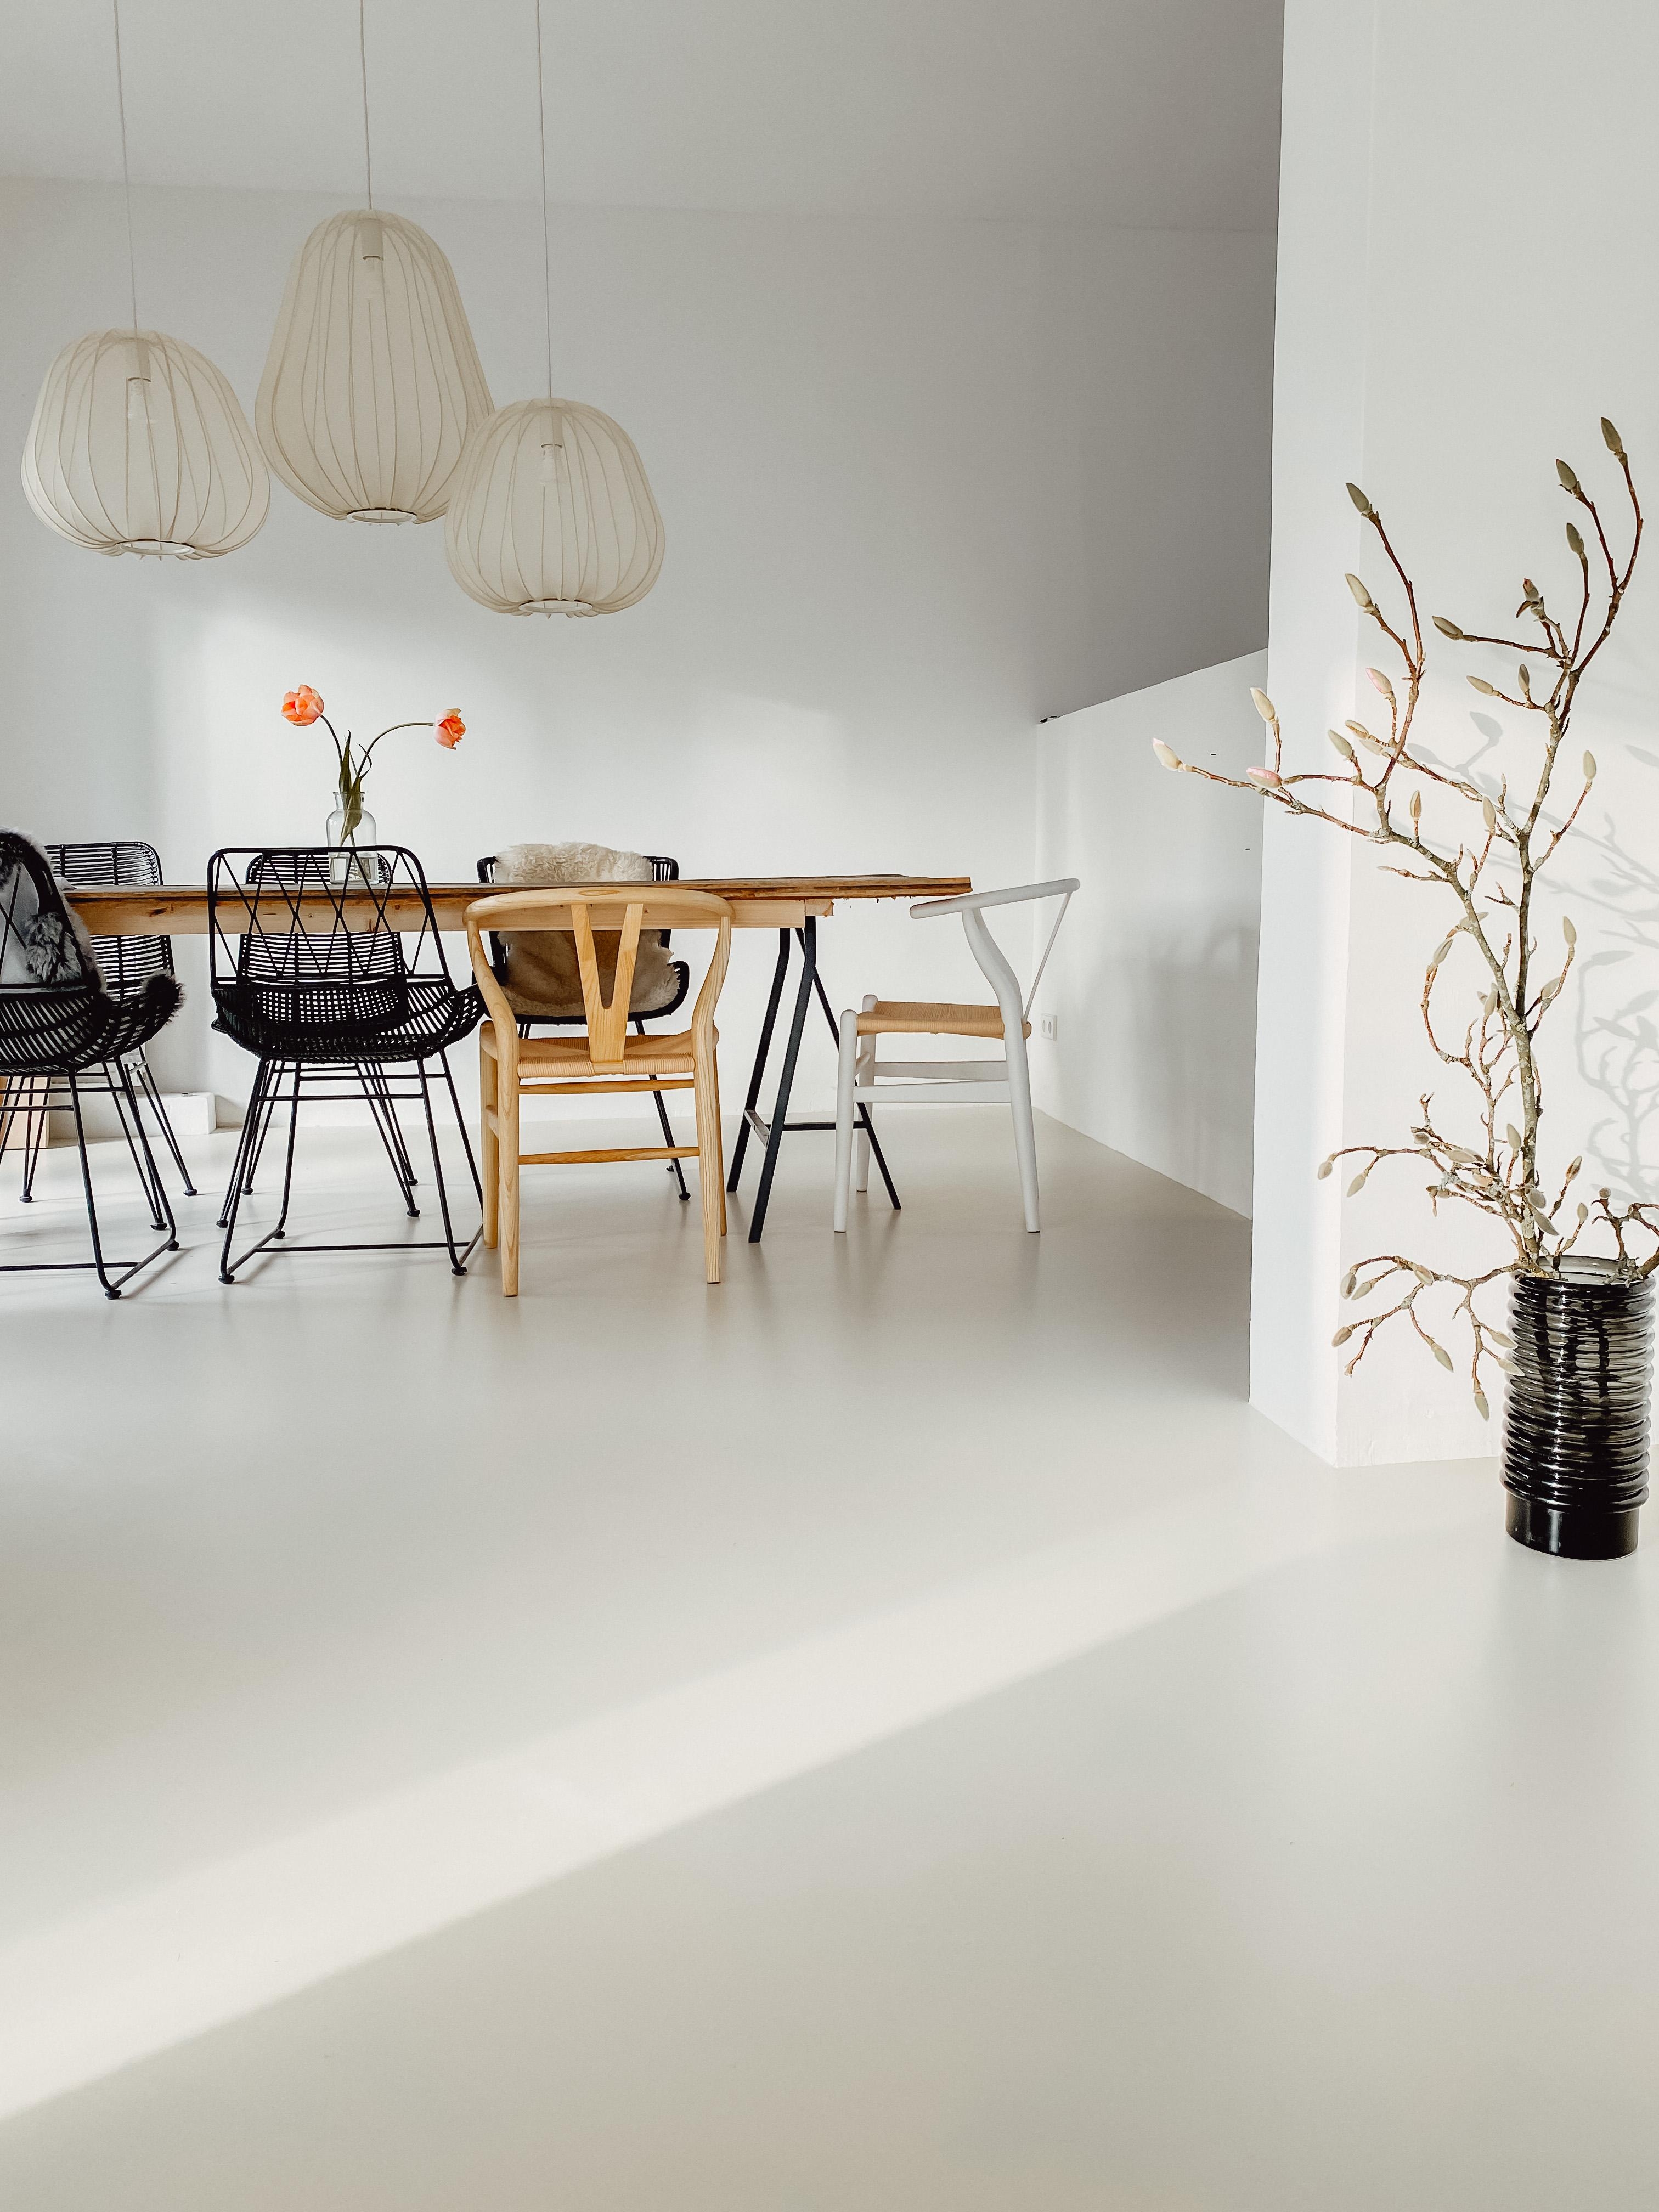 #esszimmer #esstisch #magnolia #bolia #sunshine #livingroom #lightning #diningroom #diningtable #hamburg #couchliebt